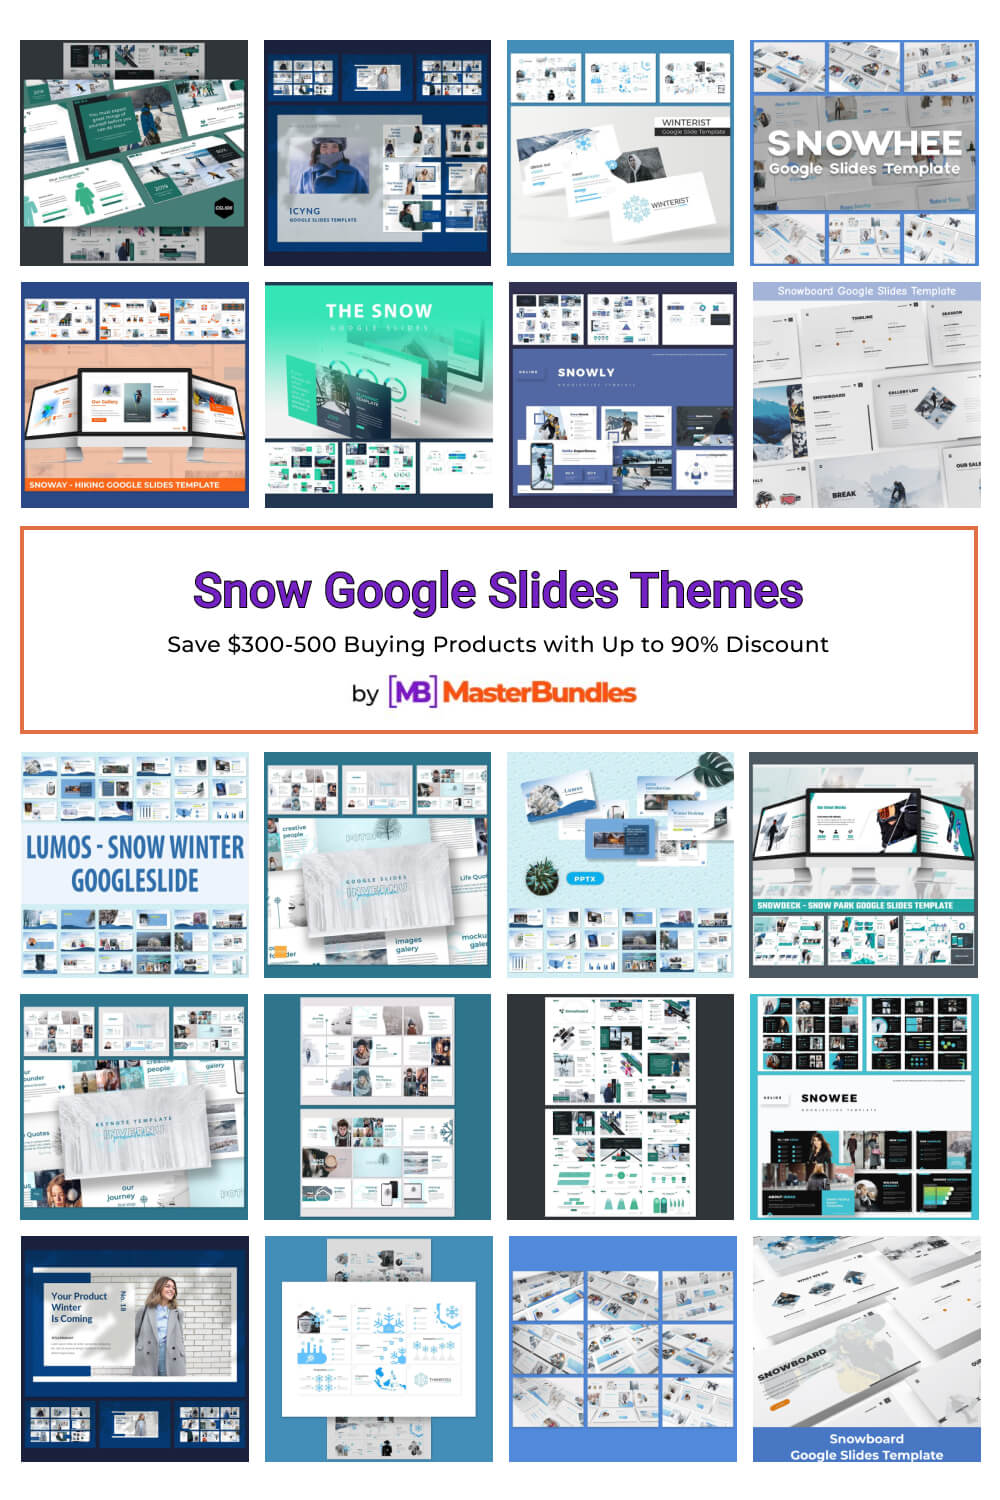 snow google slides themes pinterest image.